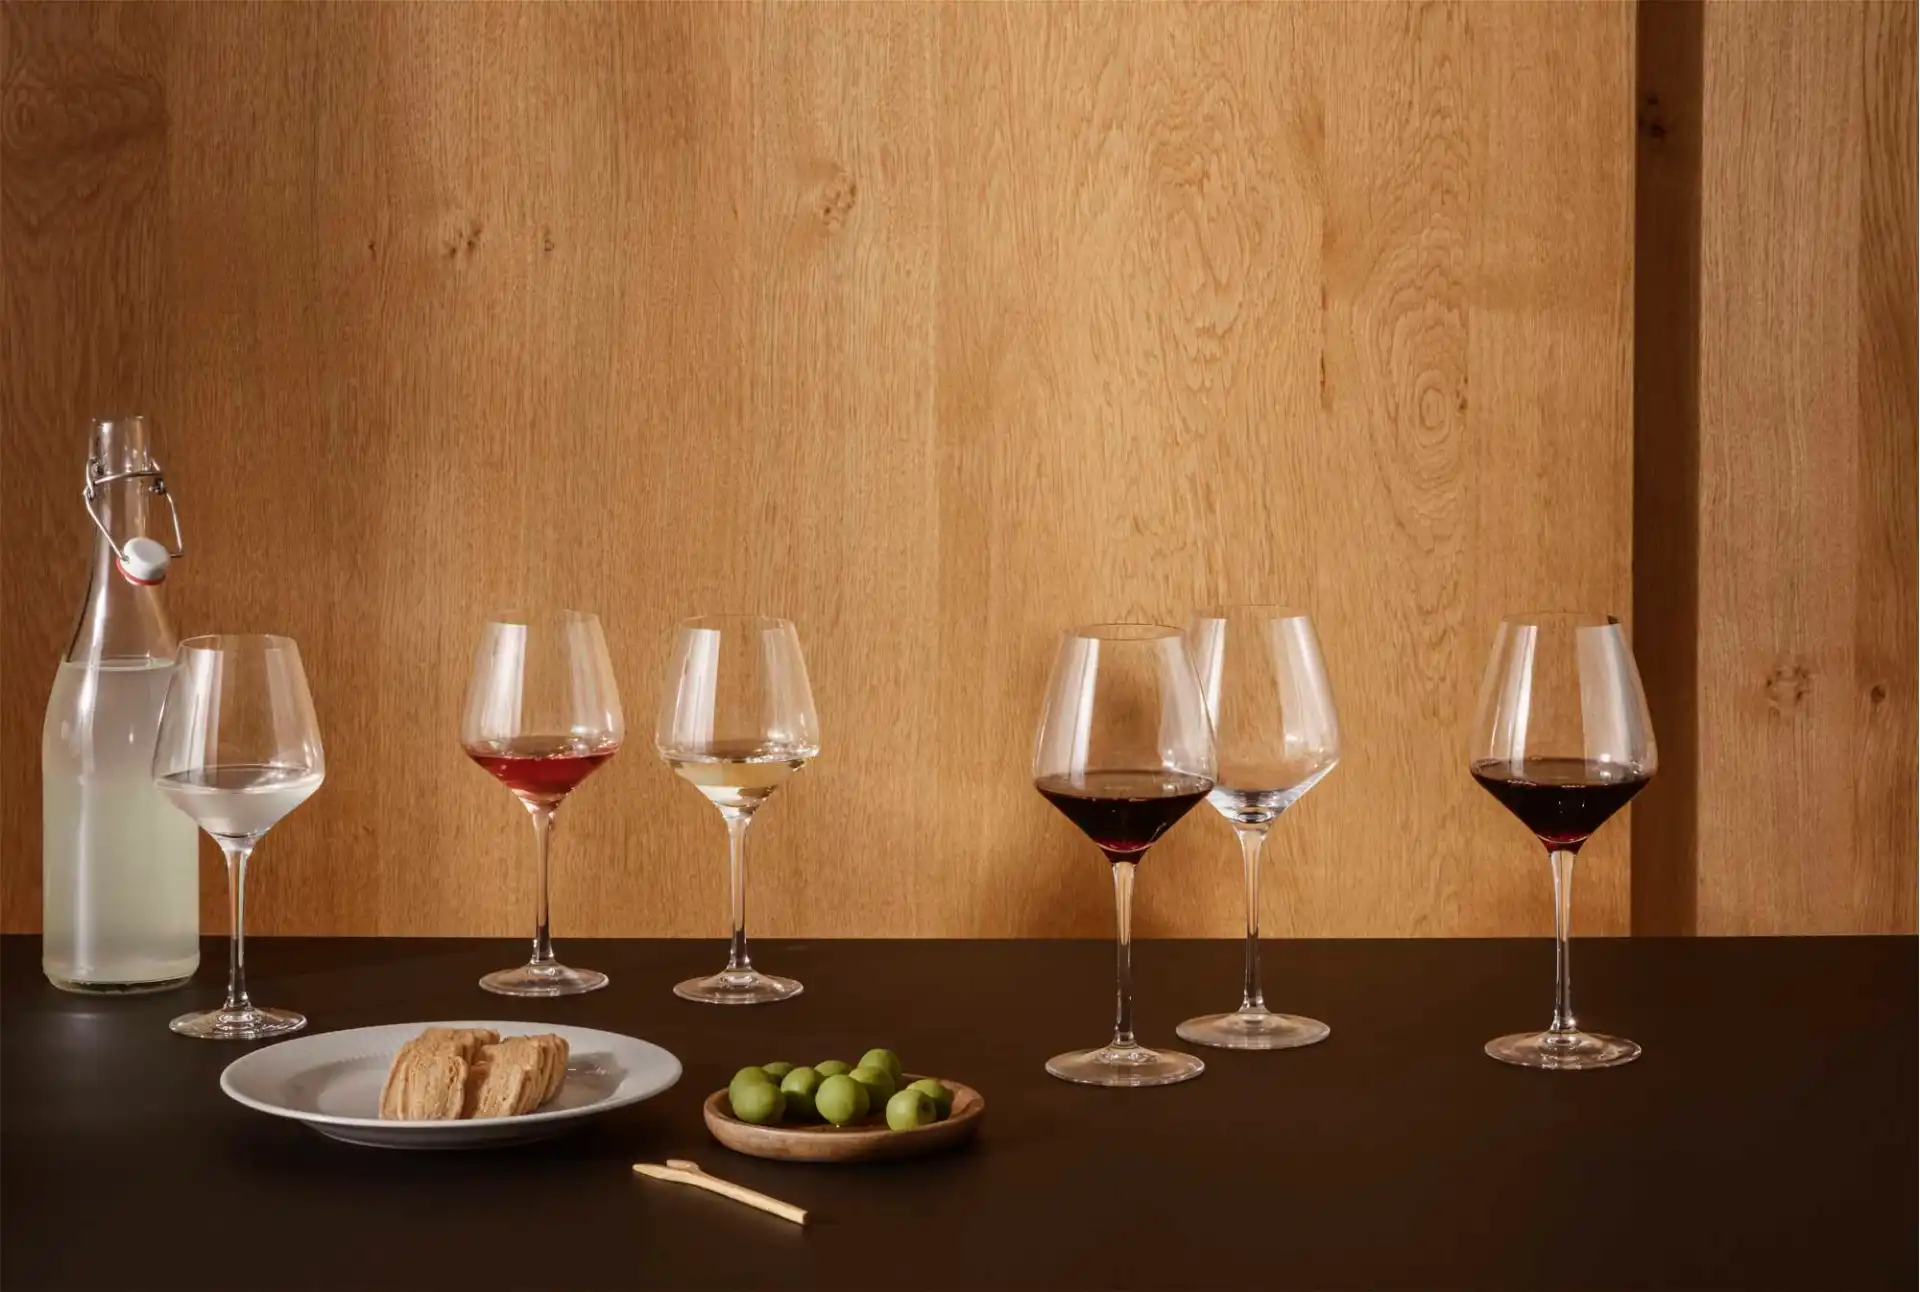 541201-541205-legio-nova-wine-glasses-redwine-whitewine-table-l.webp